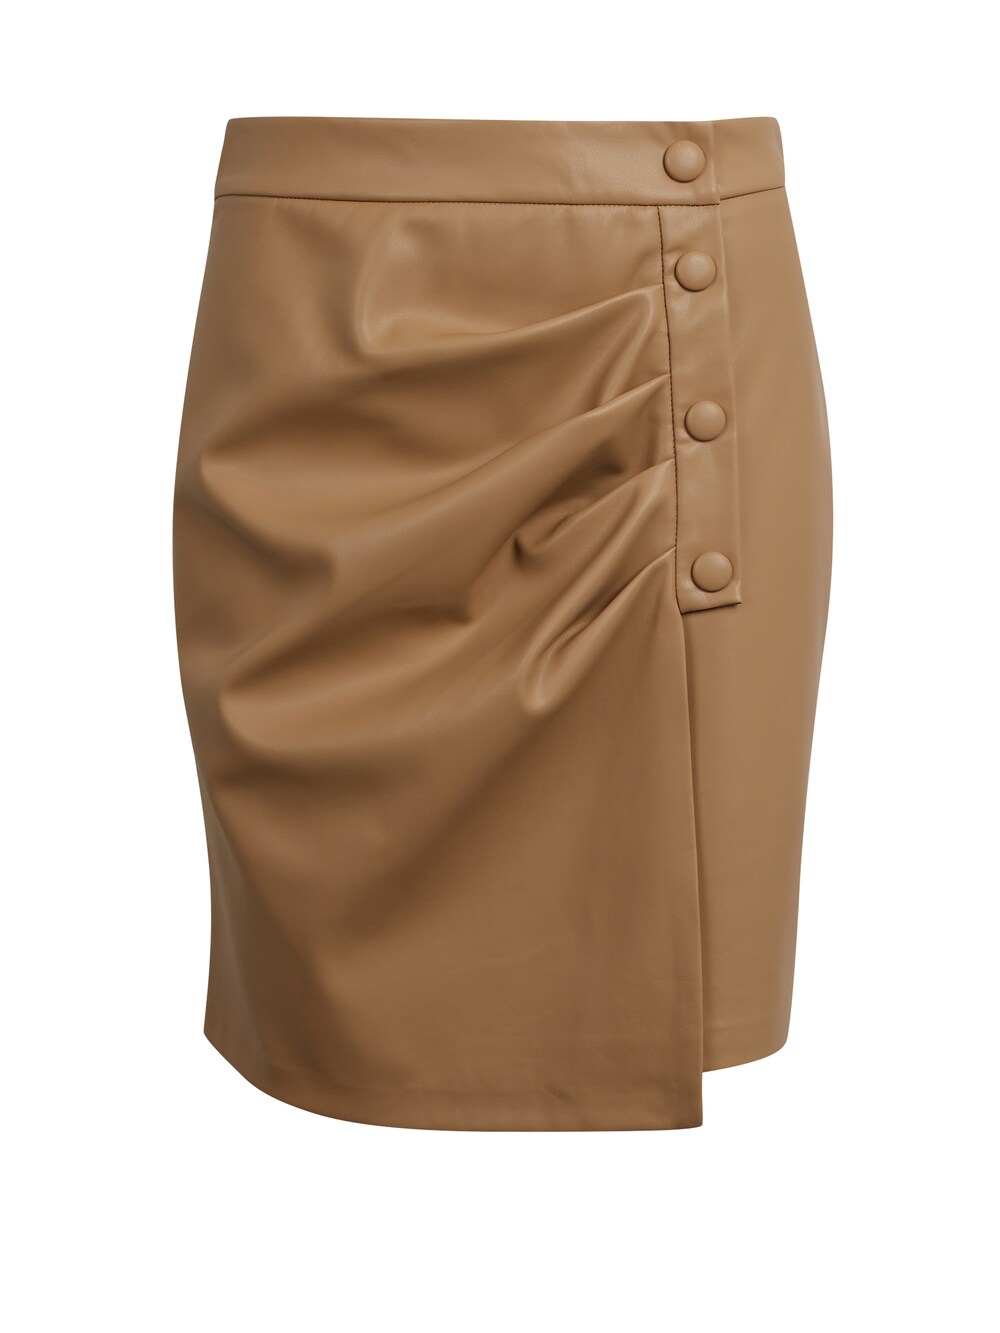 Юбка Orsay, коричневый юбка orsay светлая 44 размер